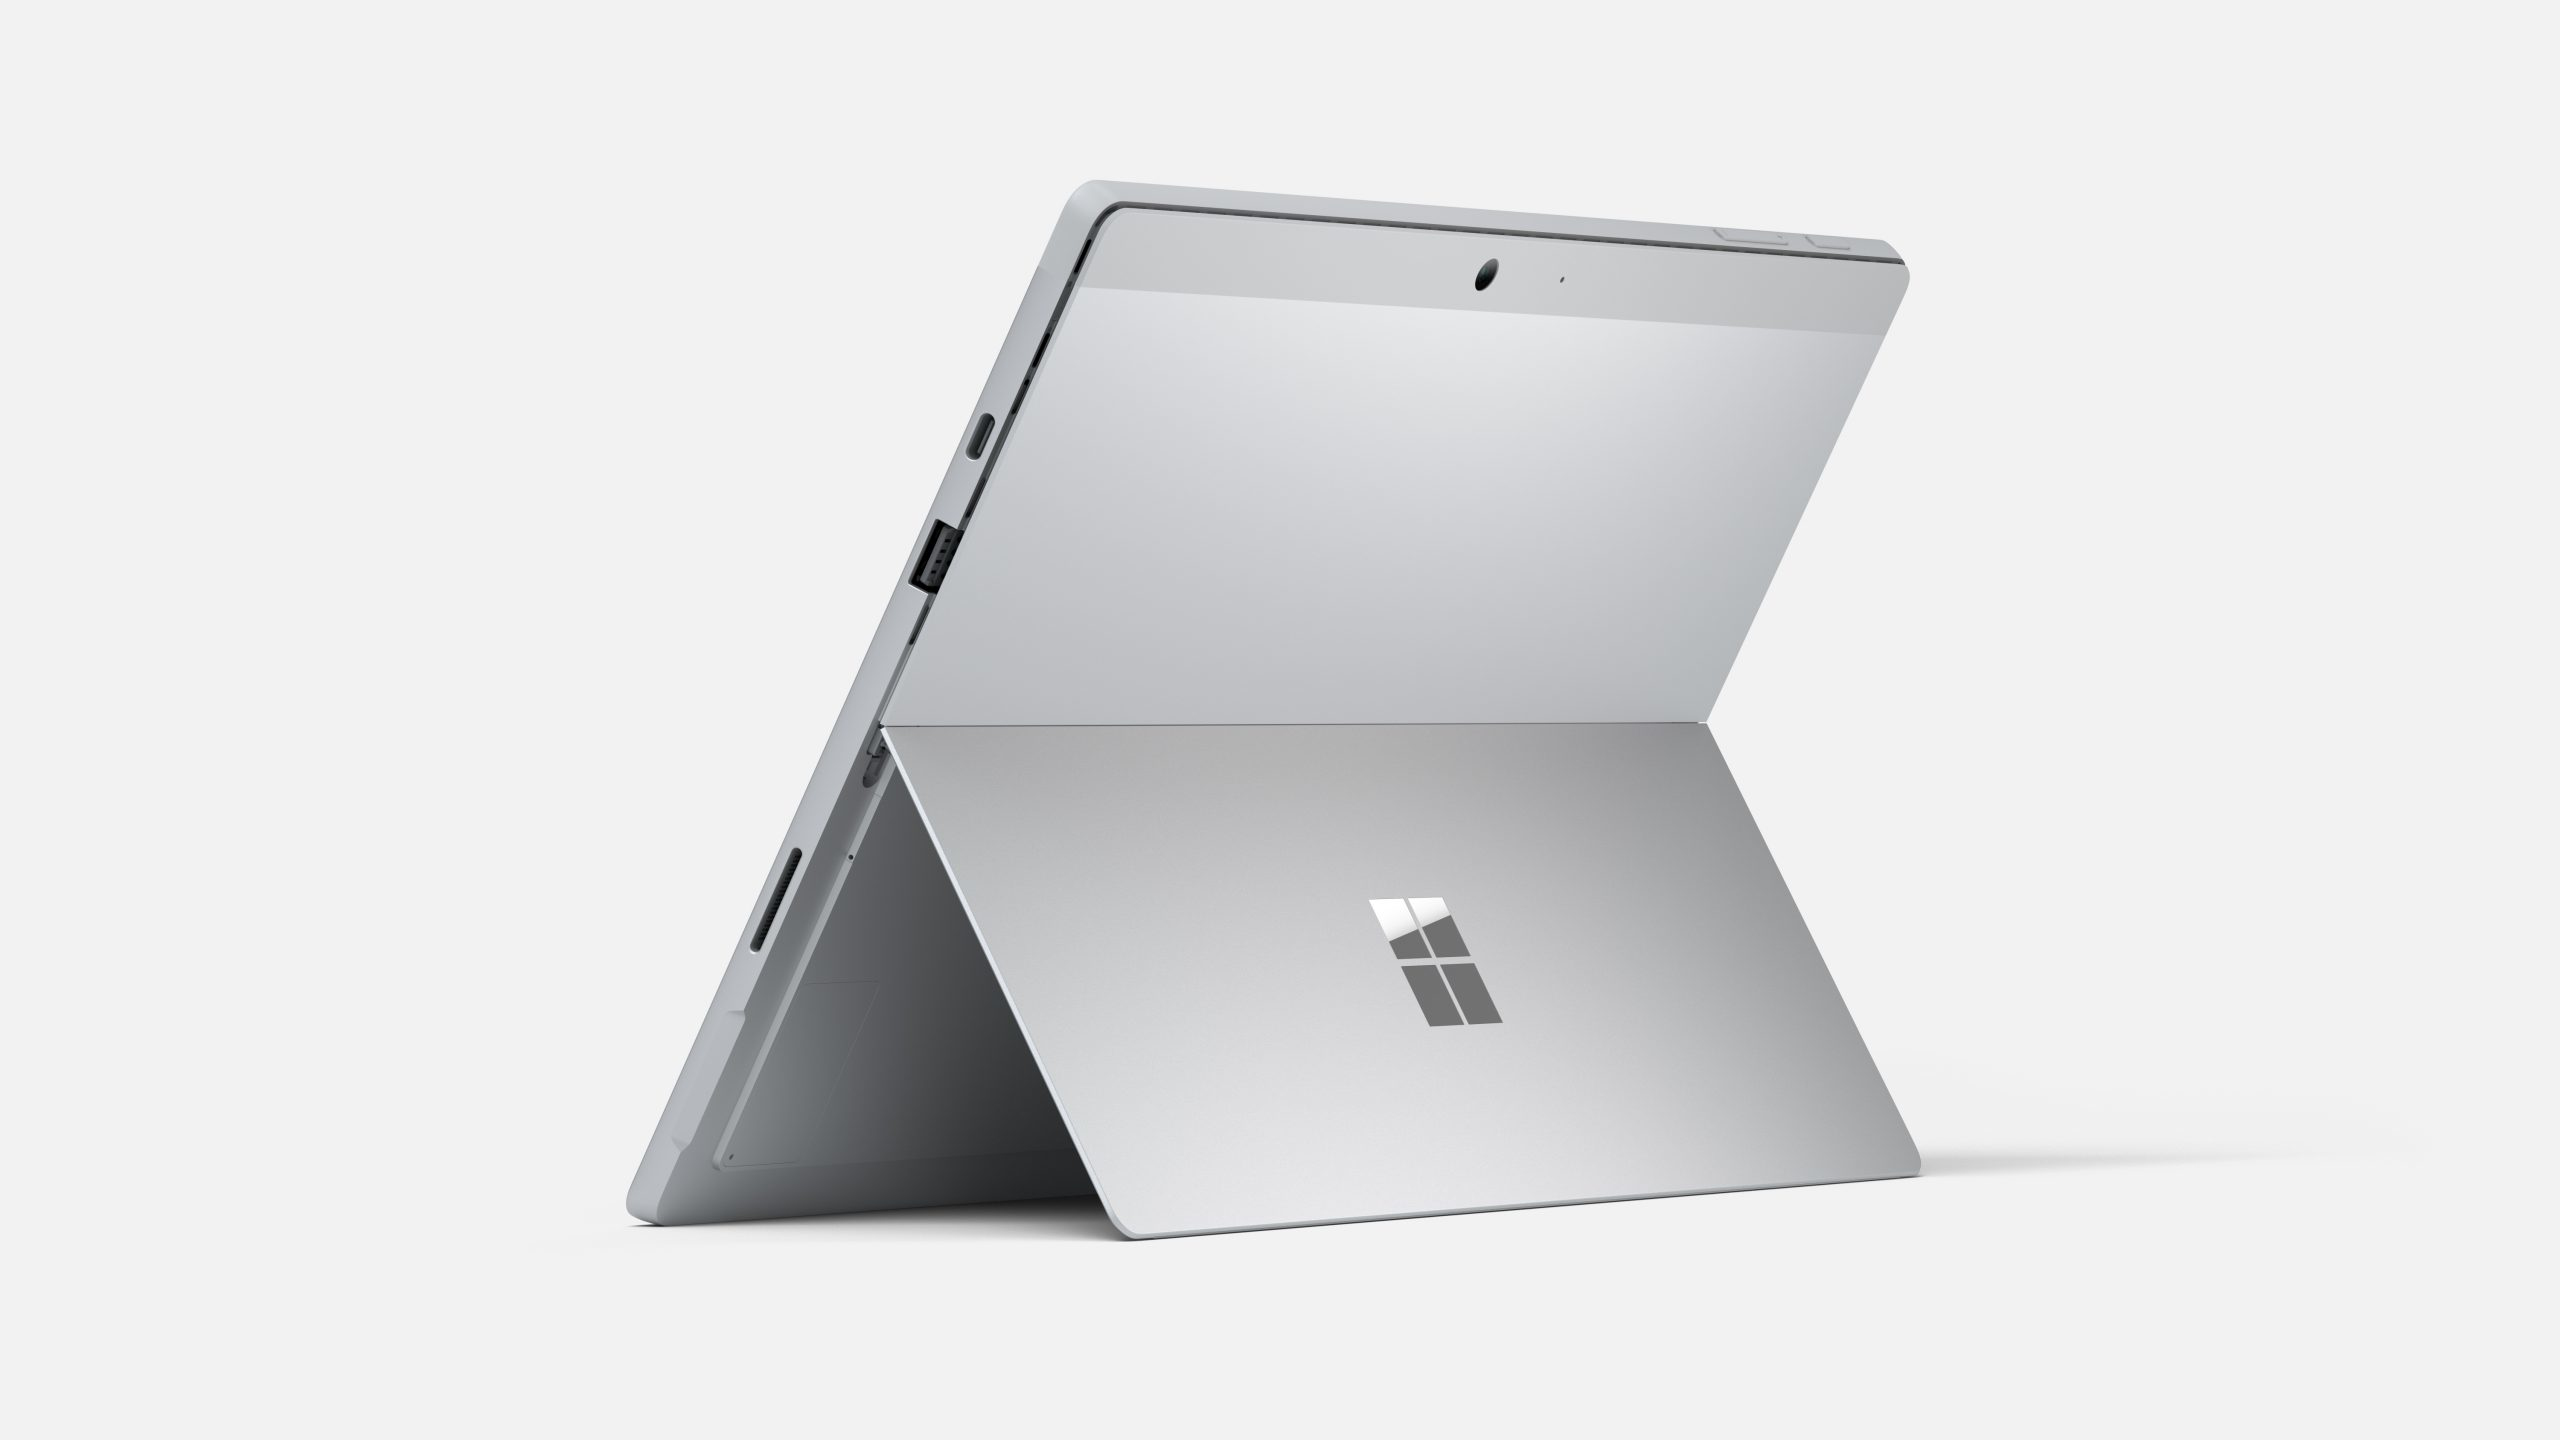 Microsoft Surface Pro 7+ - i5 1135G7 - 8GB RAM - 256GB SSD - Win 10 Pro 